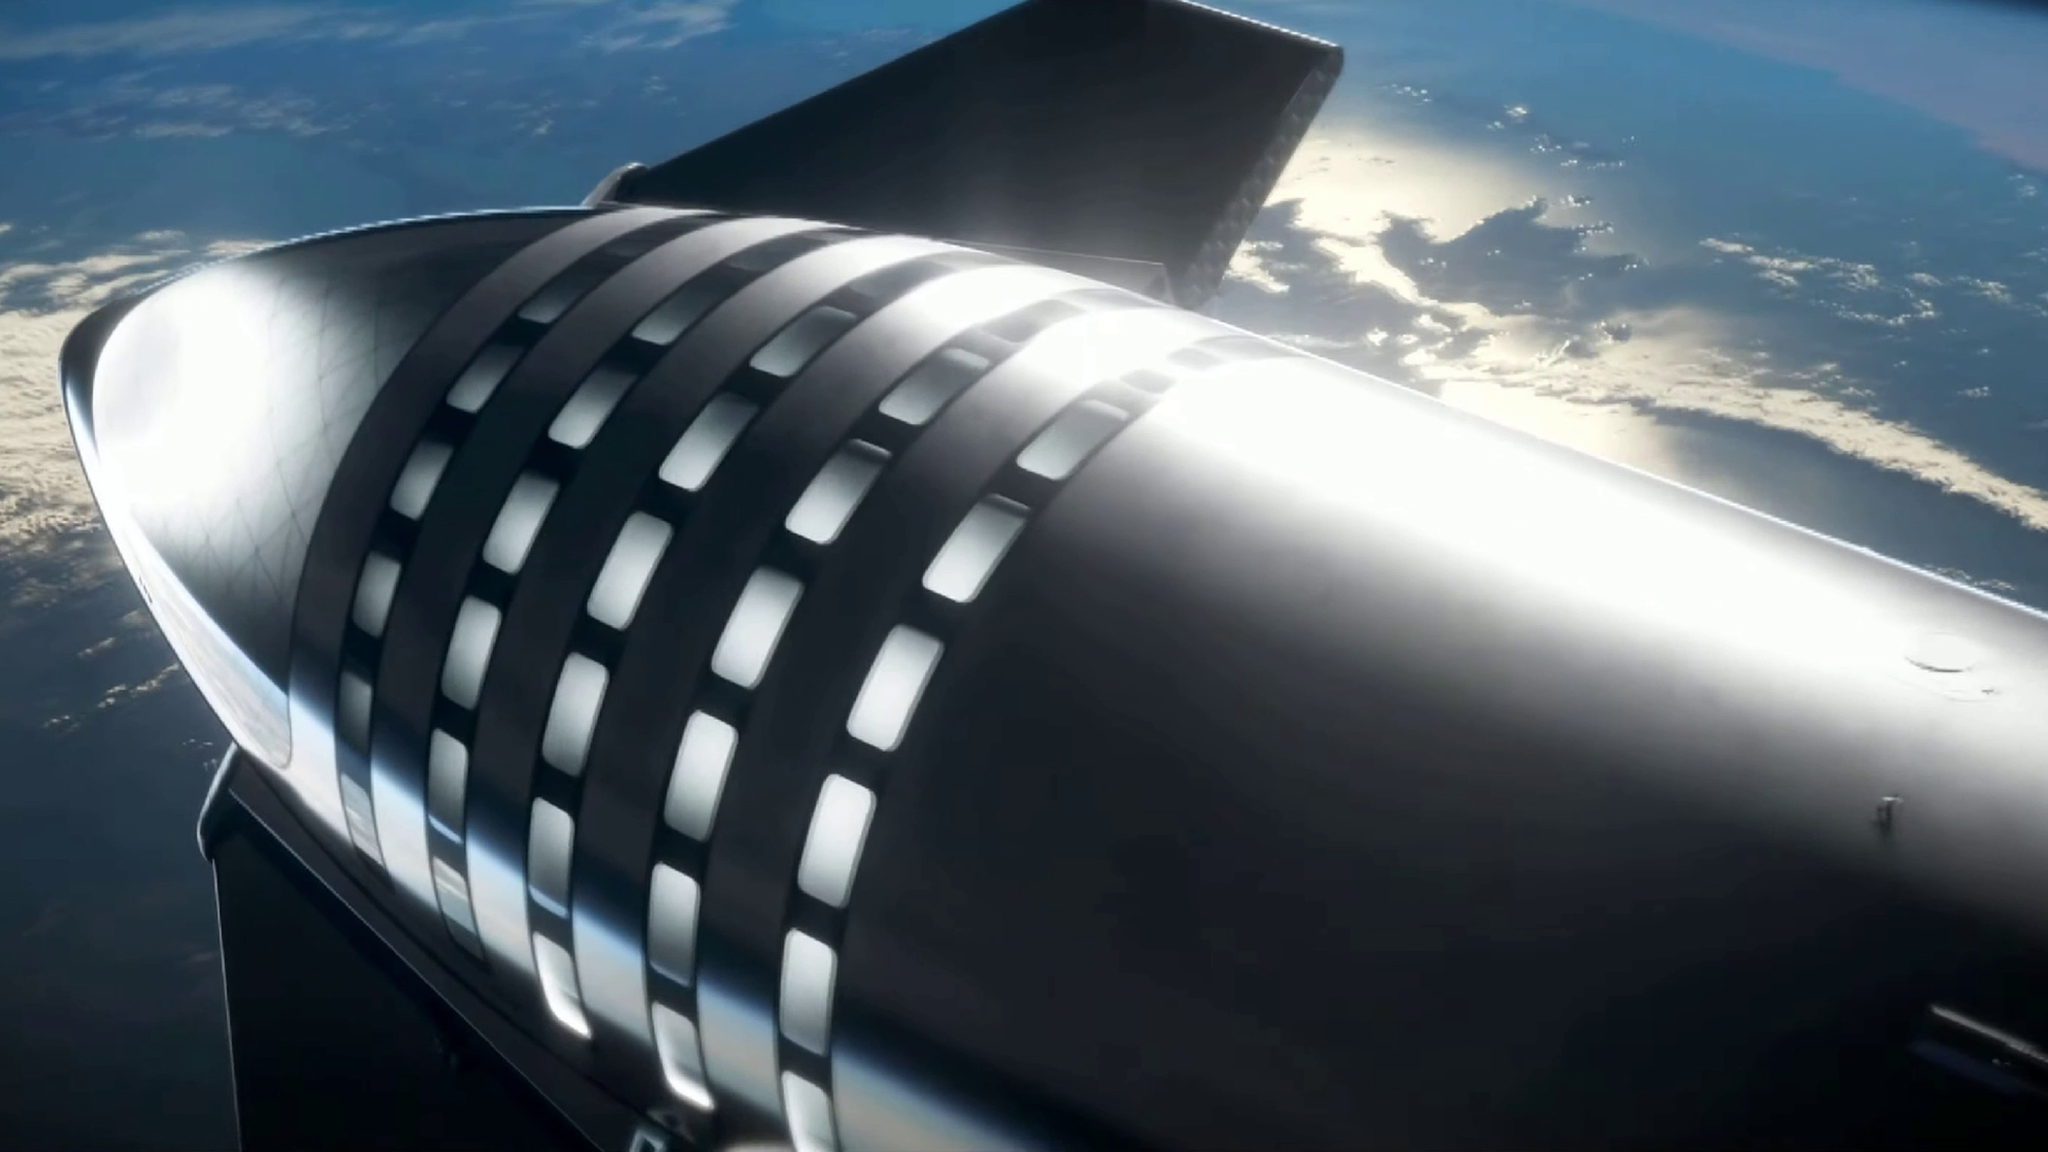 Elon Musk: Starship rocket close to going orbital - BBC News